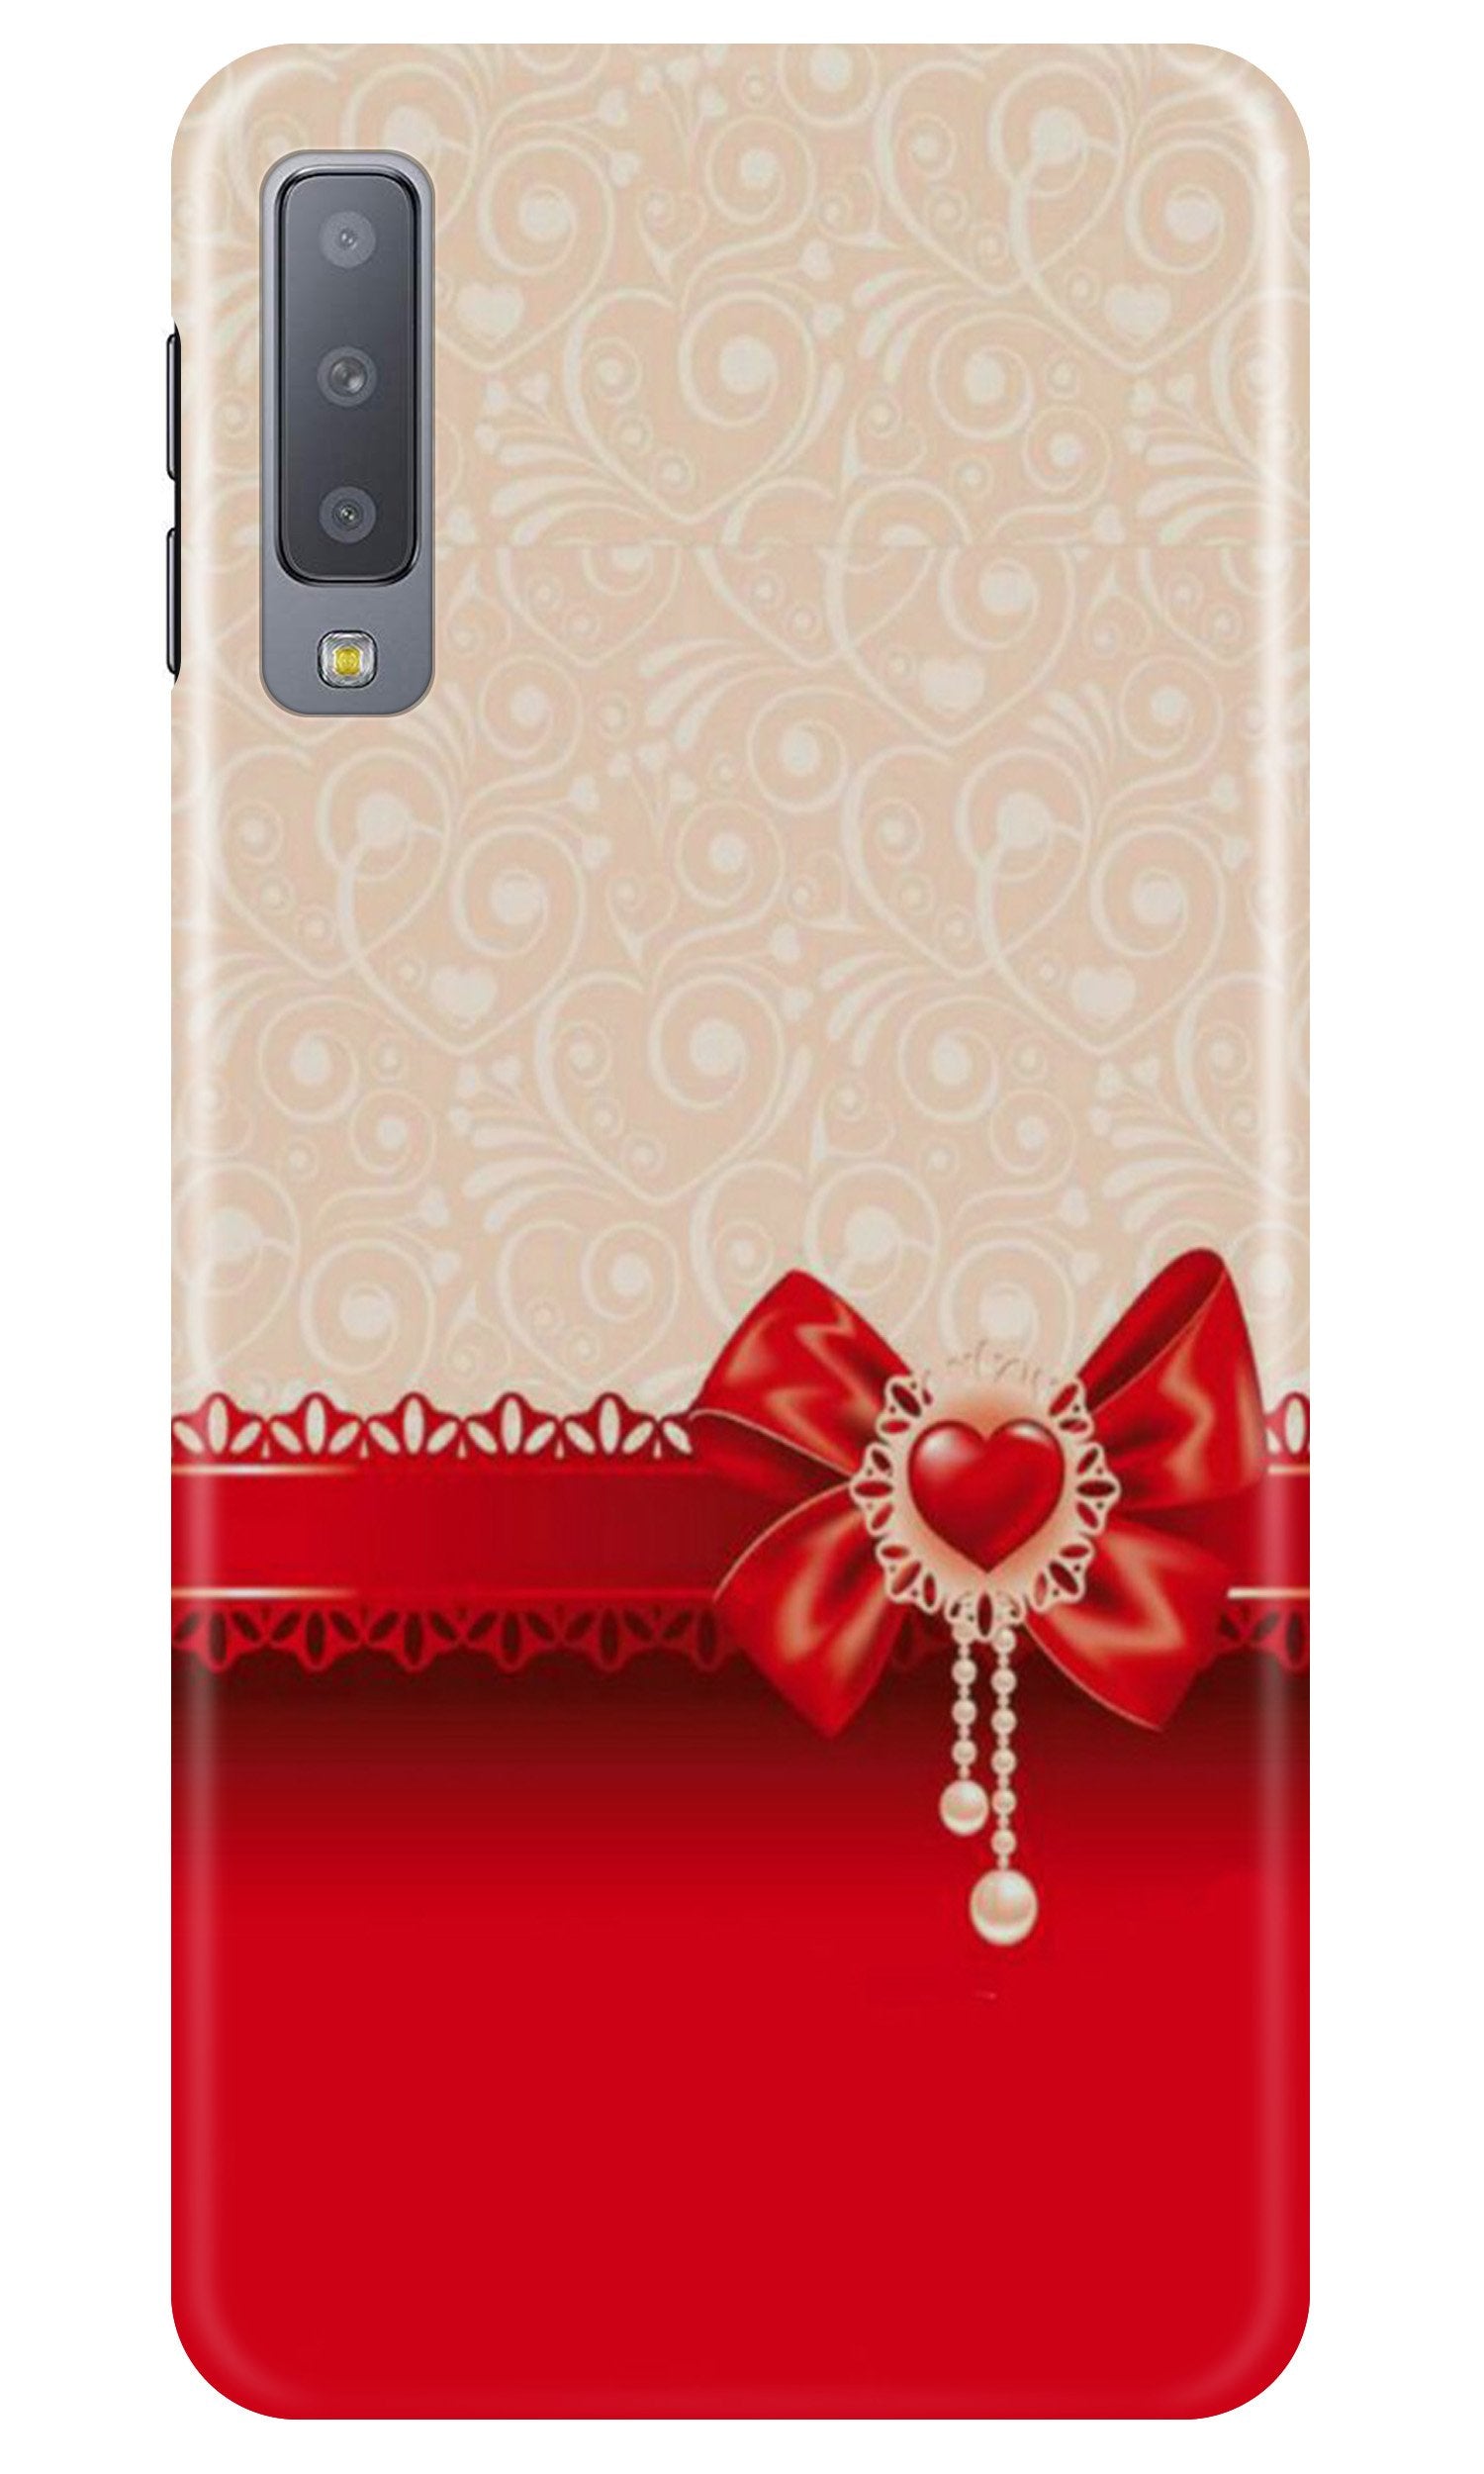 Gift Wrap3 Case for Samsung Galaxy A70